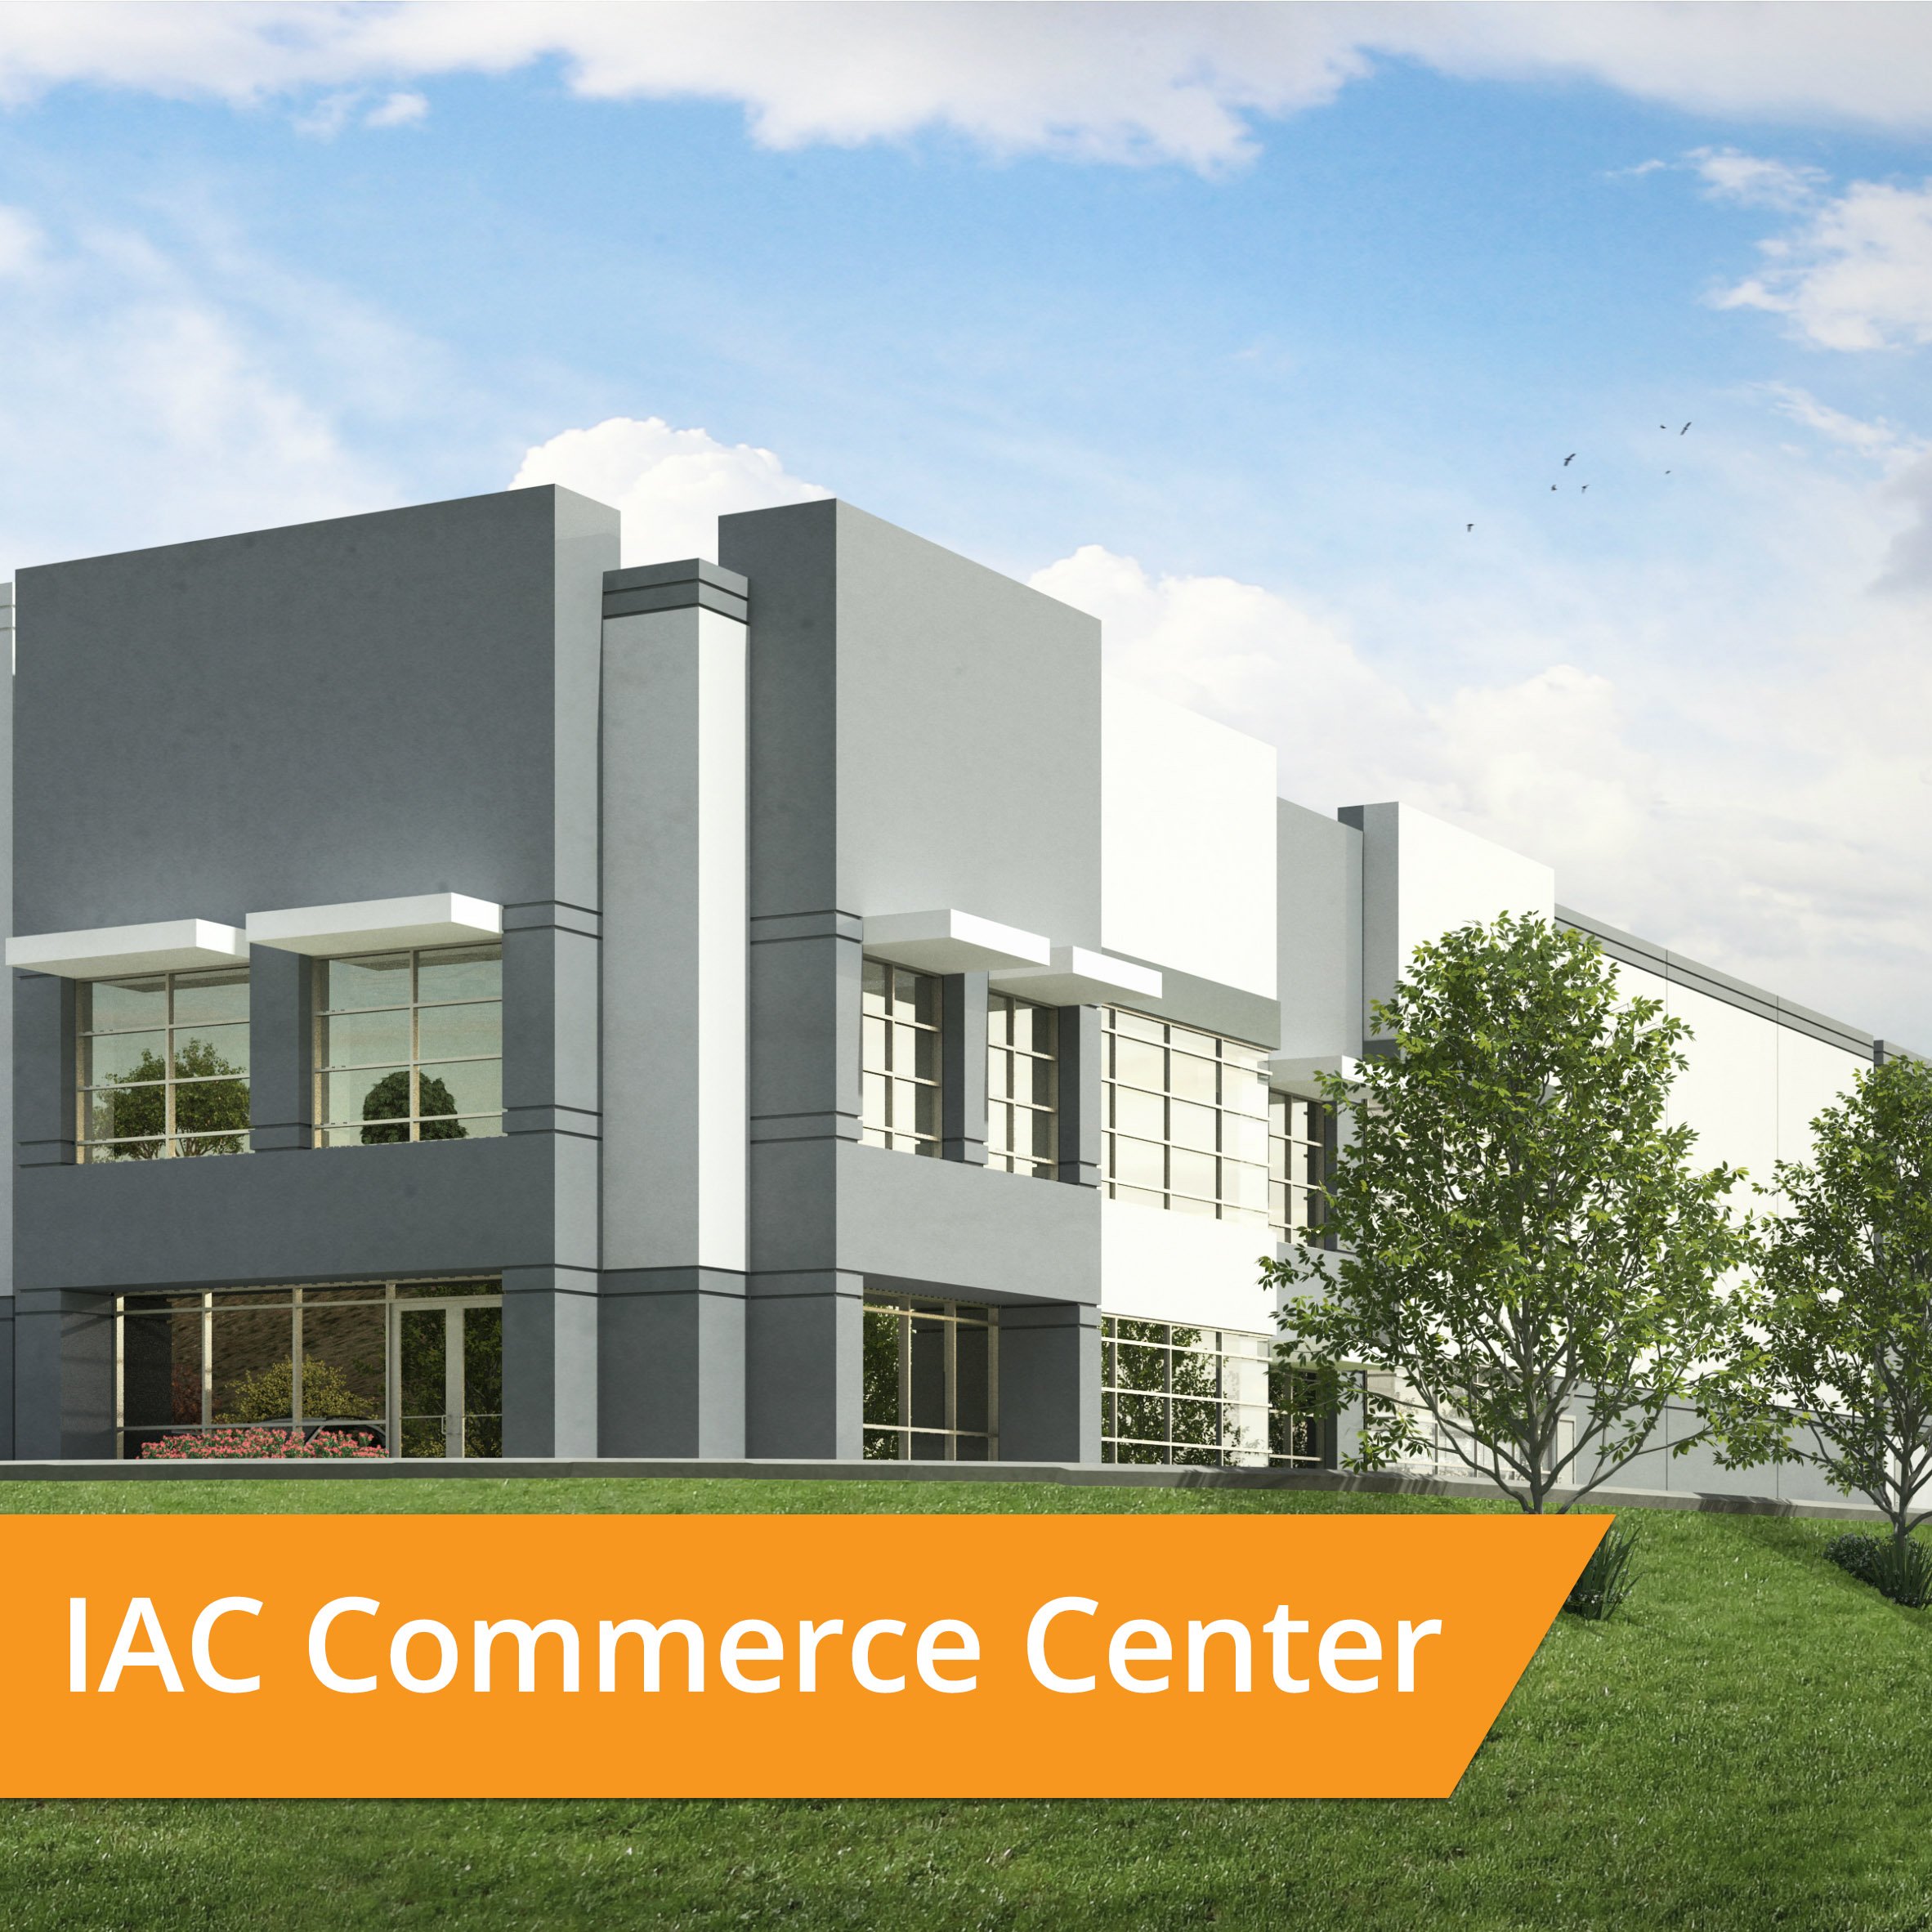 IAC Commerce Center in Santa Clarita